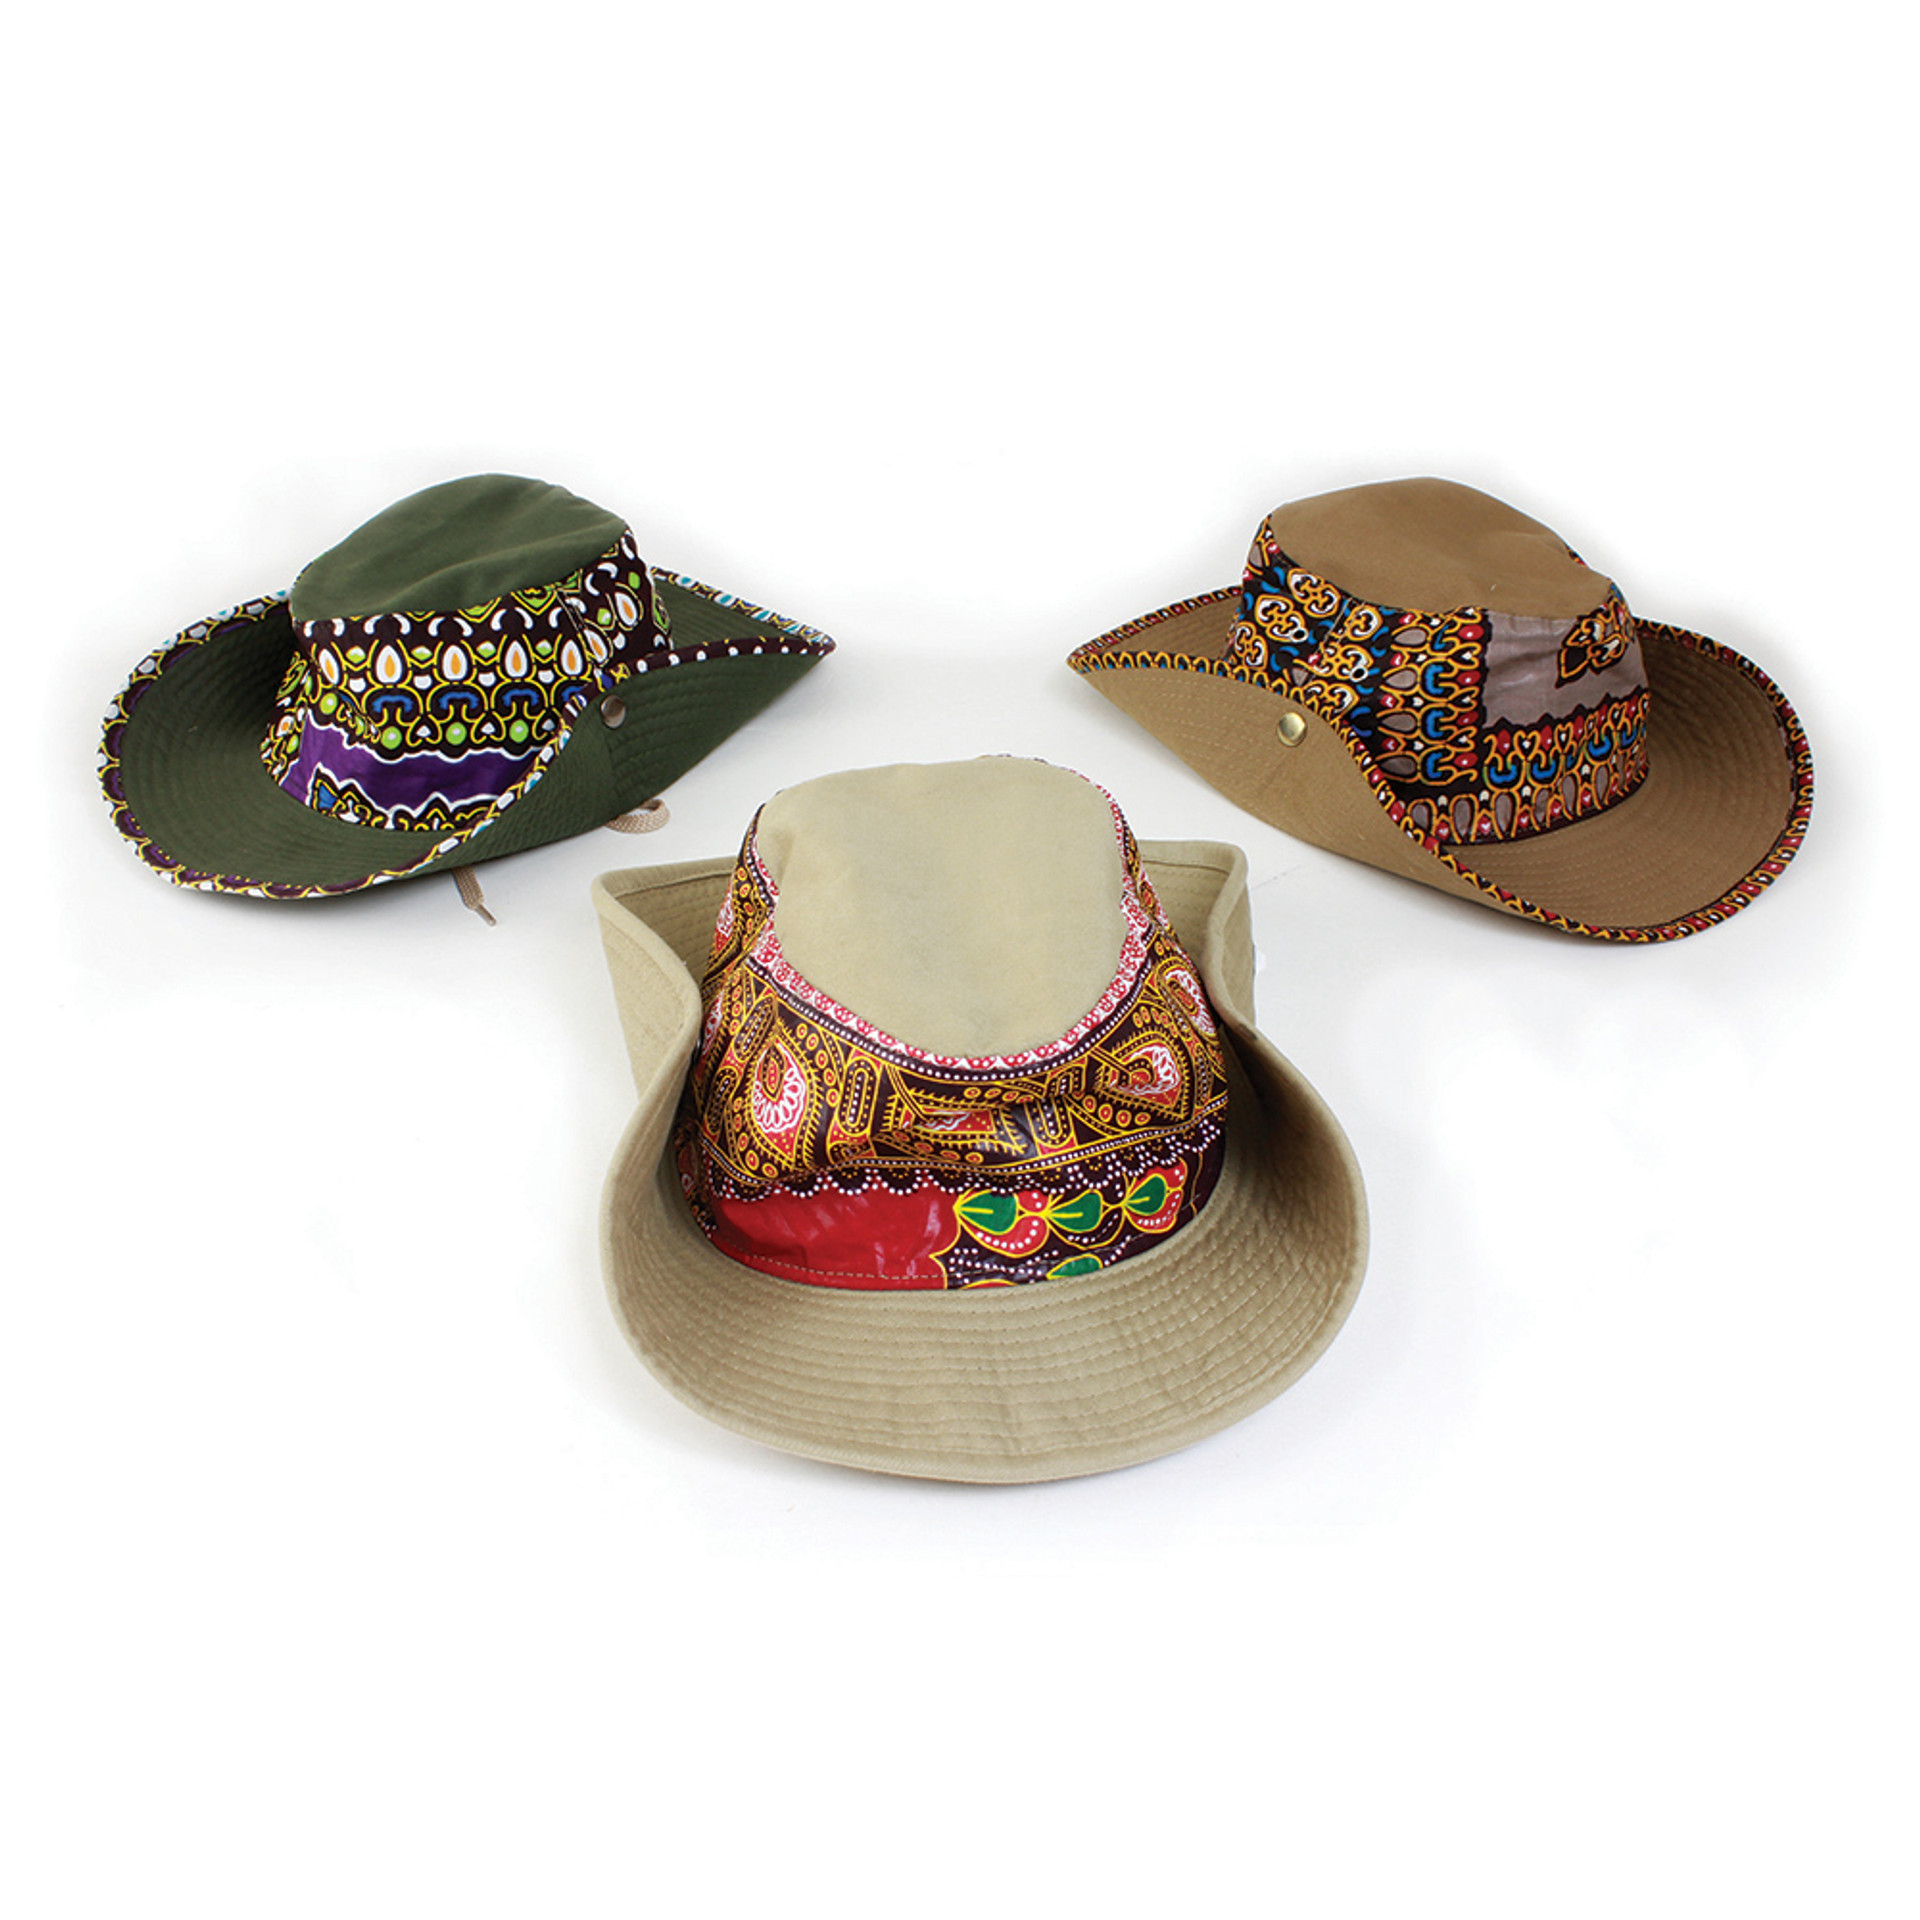 Kitenge Safari Hat - ASSORTED COLORS - Hats and Headwear - African Fashion